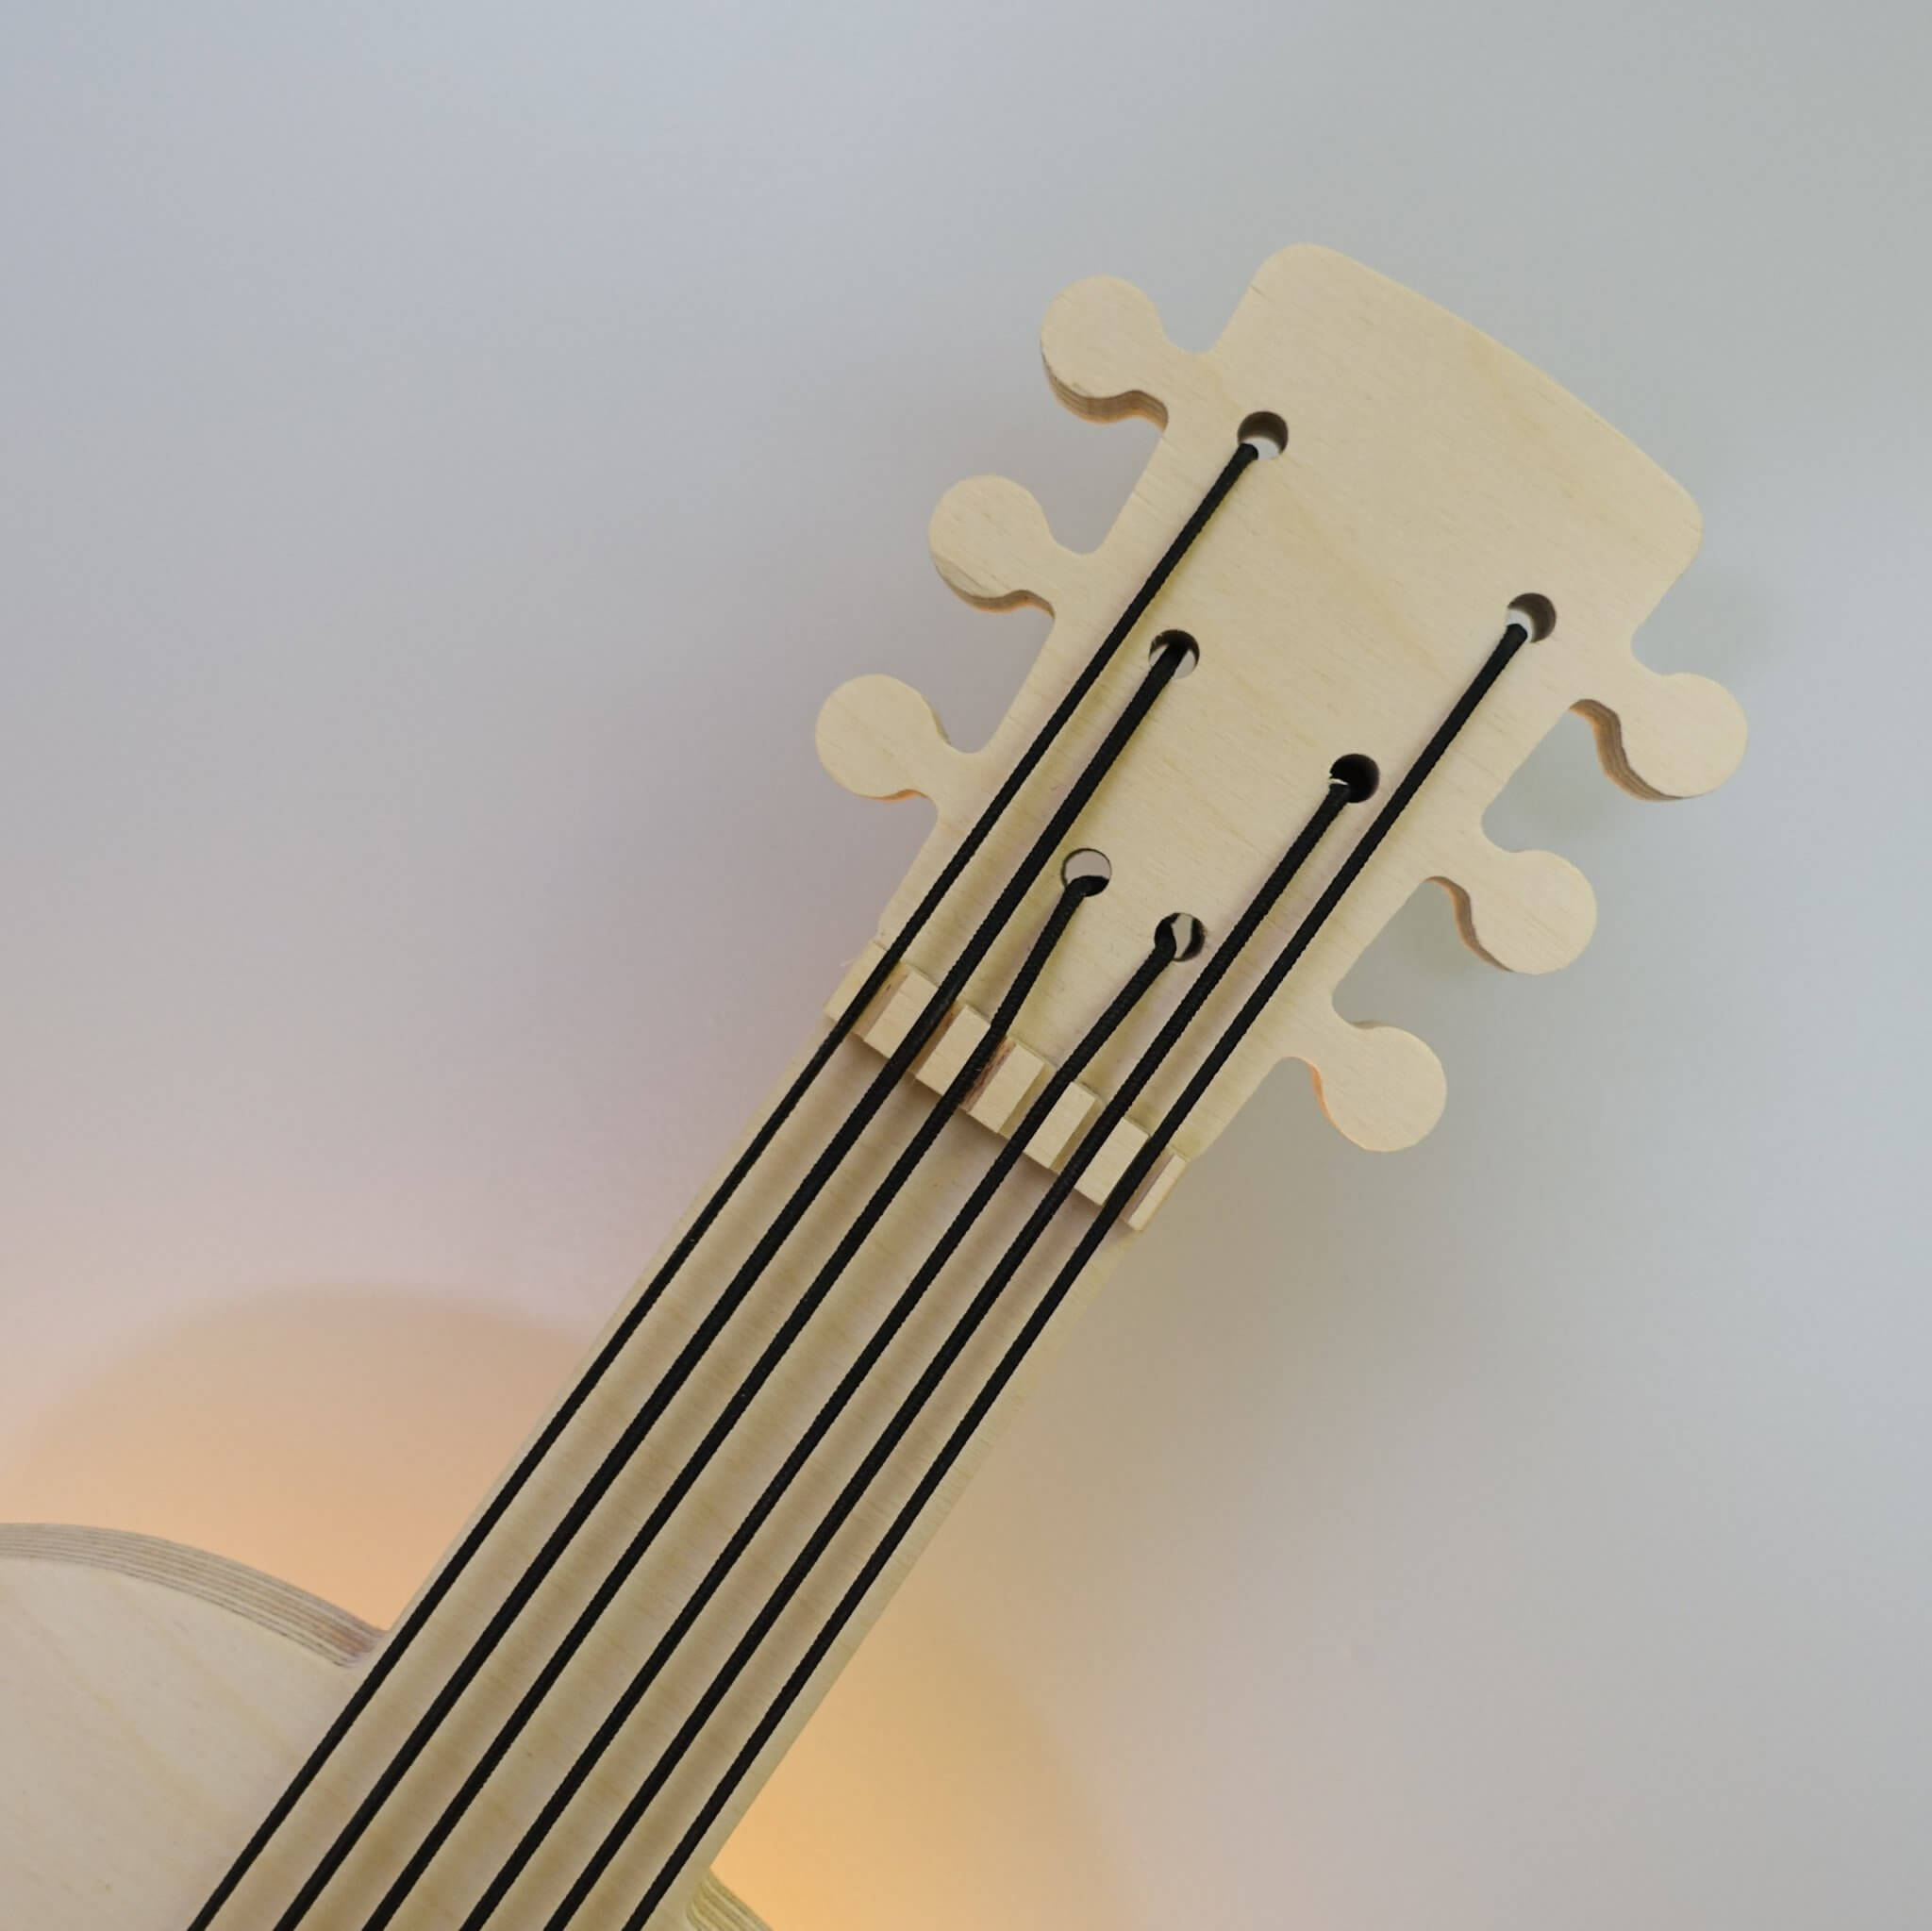 Wooden wall lamp guitar | Night lamp, plywood - toddie.com